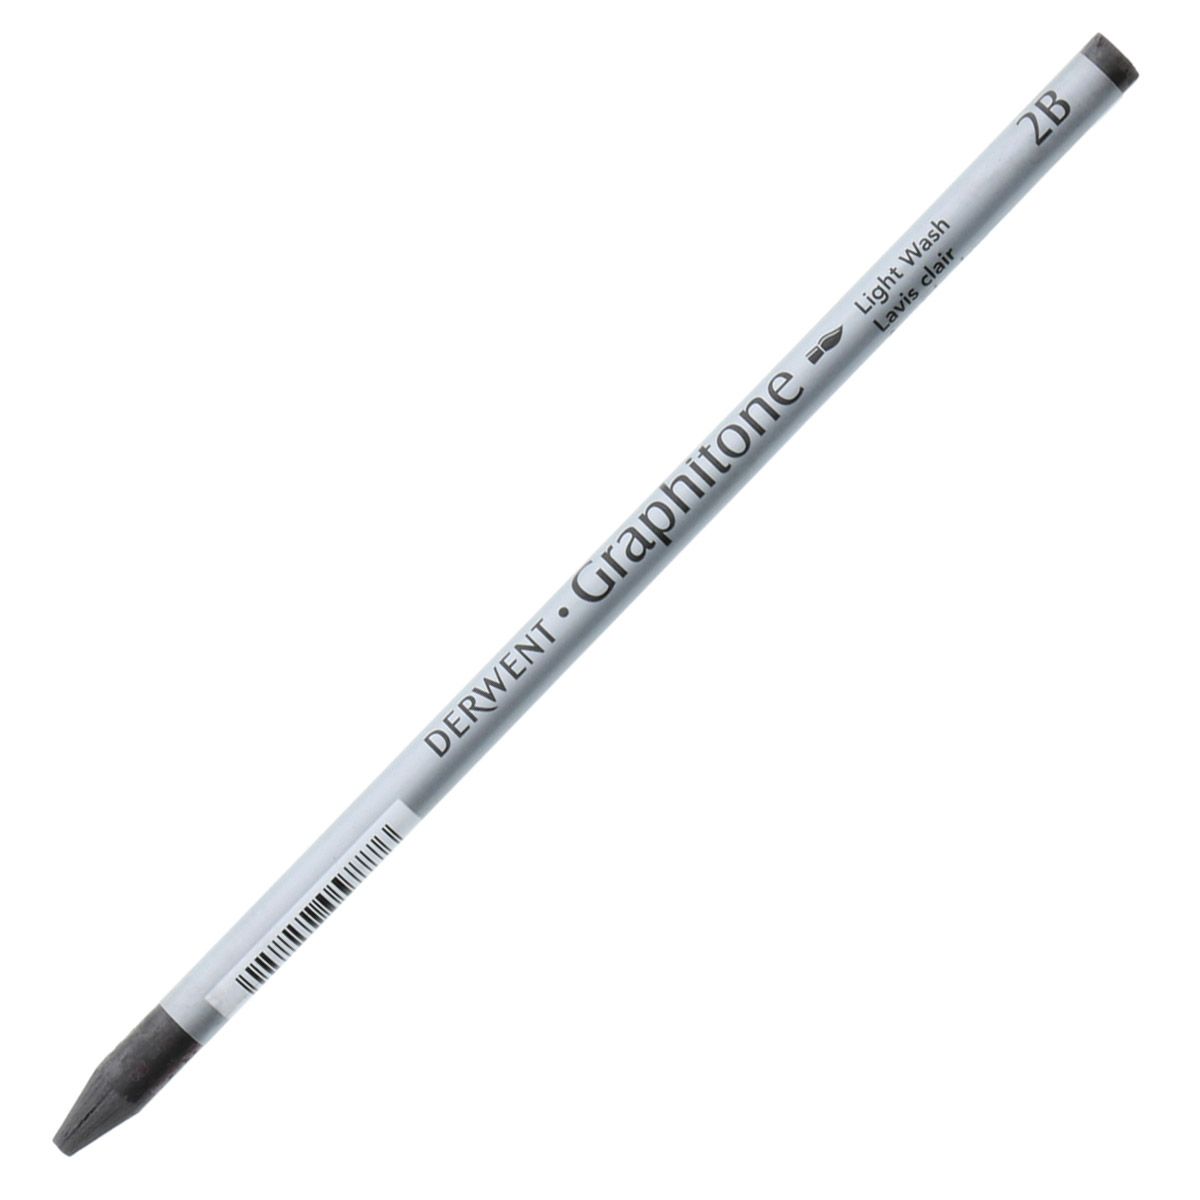 Derwent Watersoluble Graphitone Pencil - 2B Light